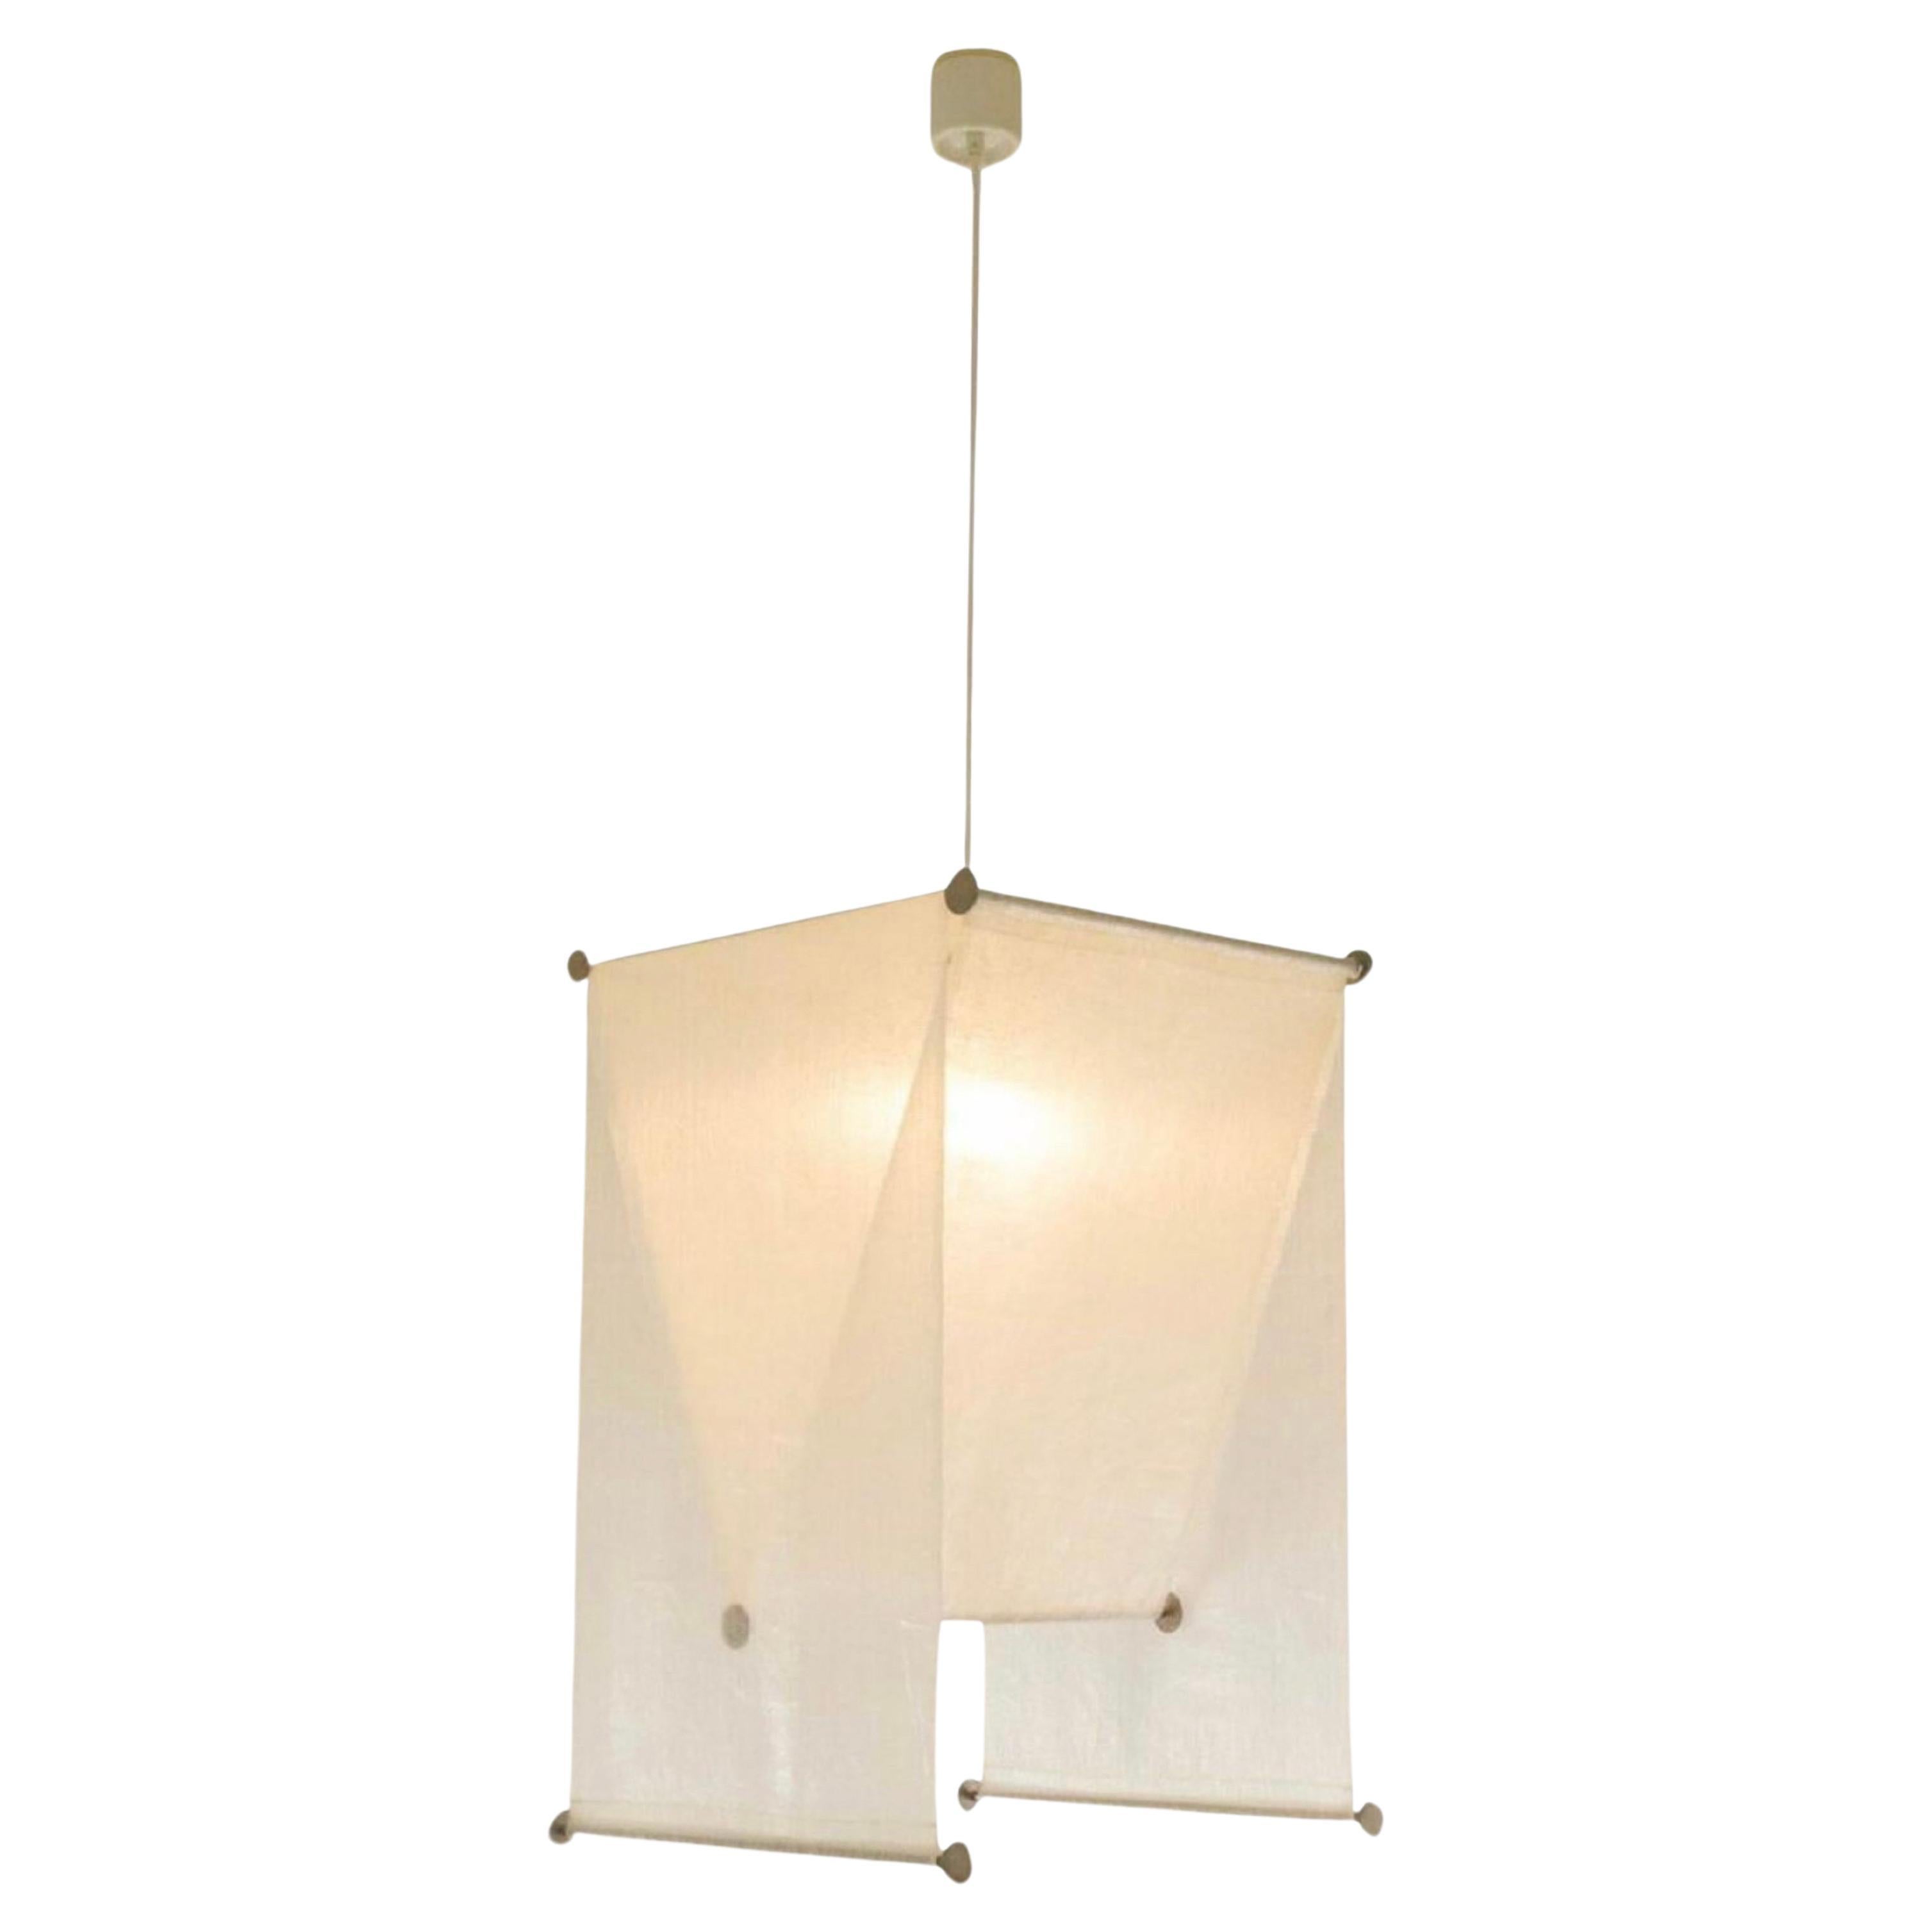 'Teli' pendant lamp by Achille and Pier Giacomo Castiglioni, Flos, Italy  For Sale